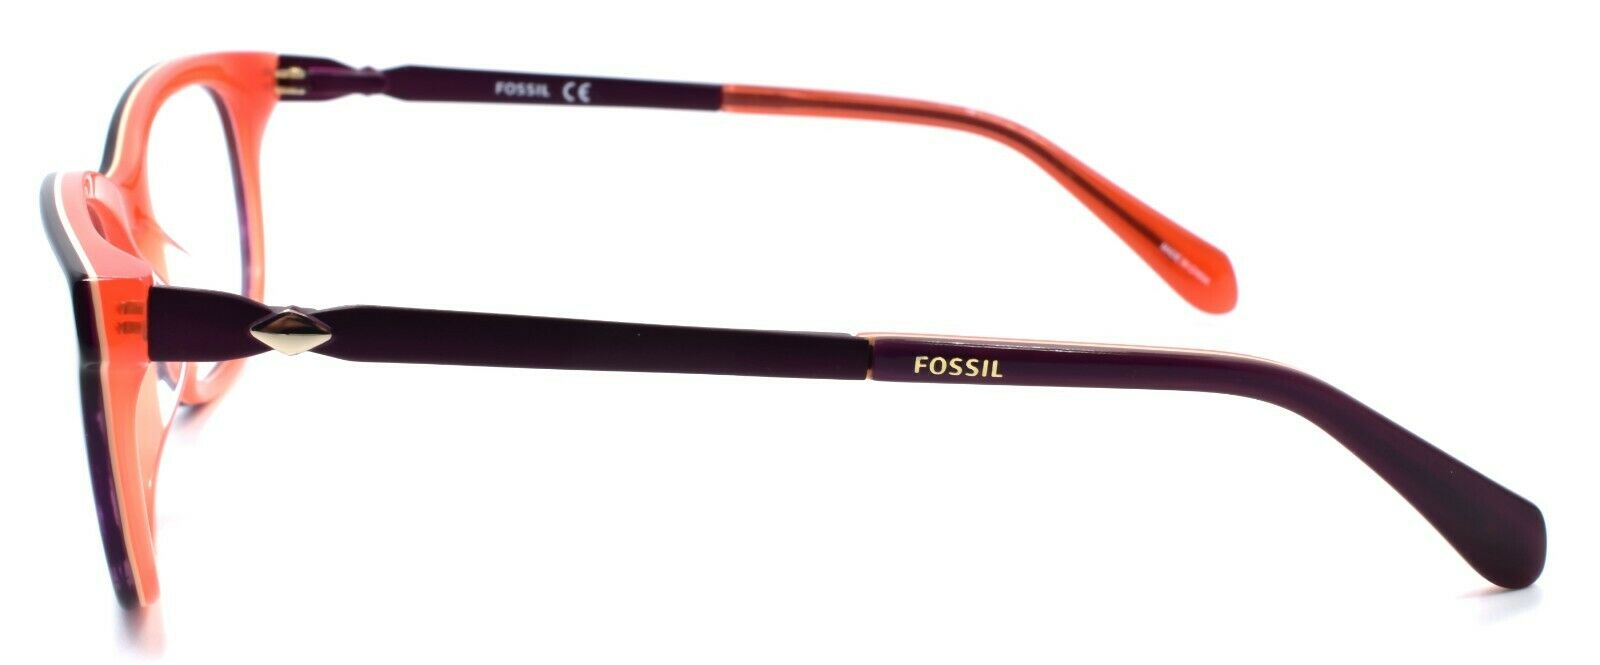 3-Fossil FOS 7025 7FF Women's Eyeglasses Frames 50-15-140 Purple Violet Red-716736029269-IKSpecs